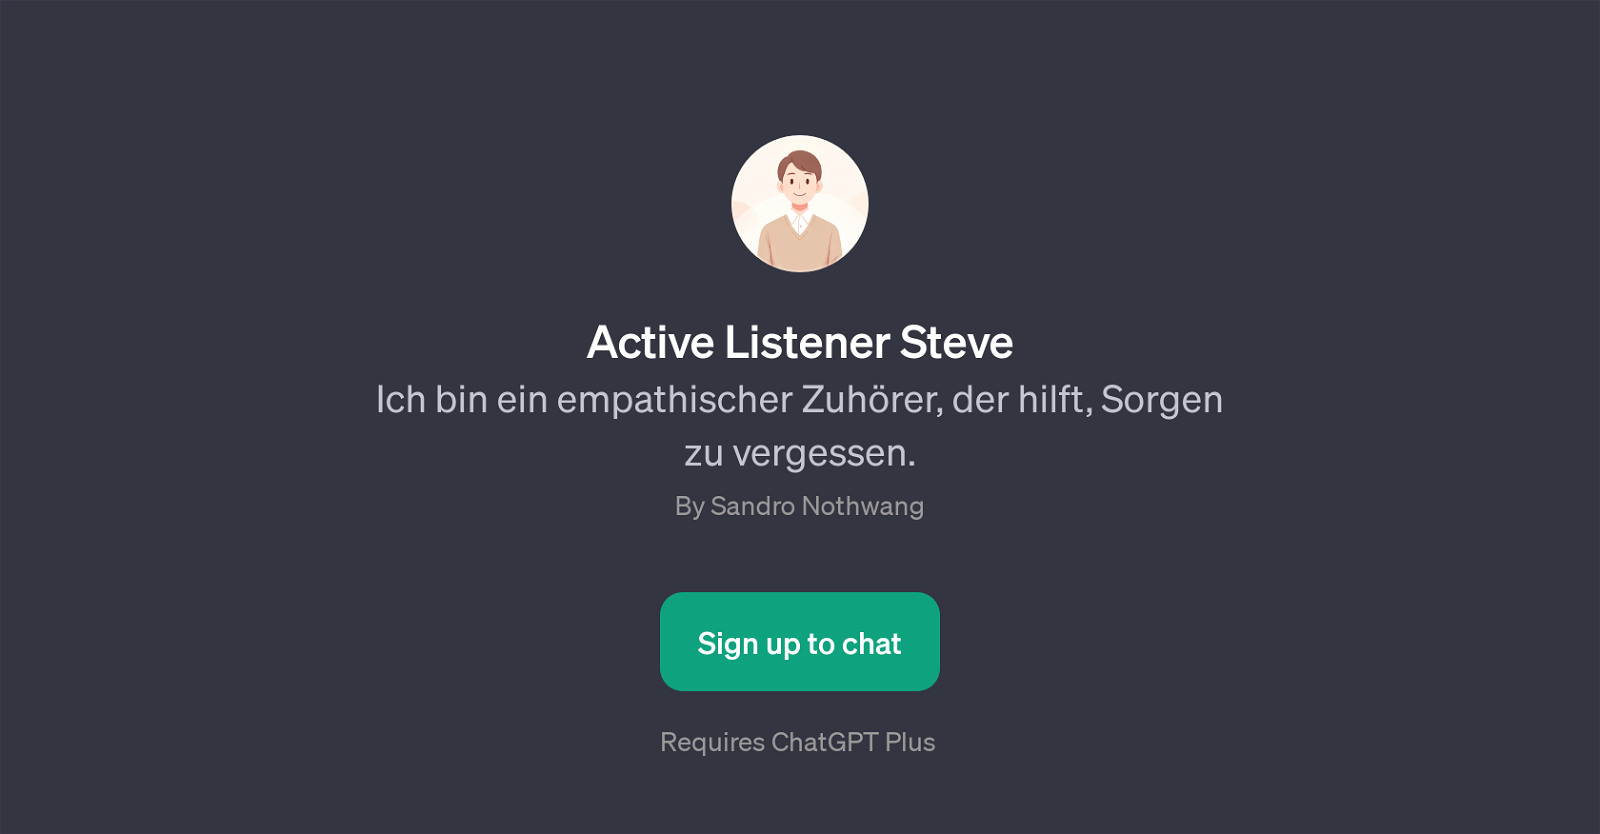 Active Listener Steve website